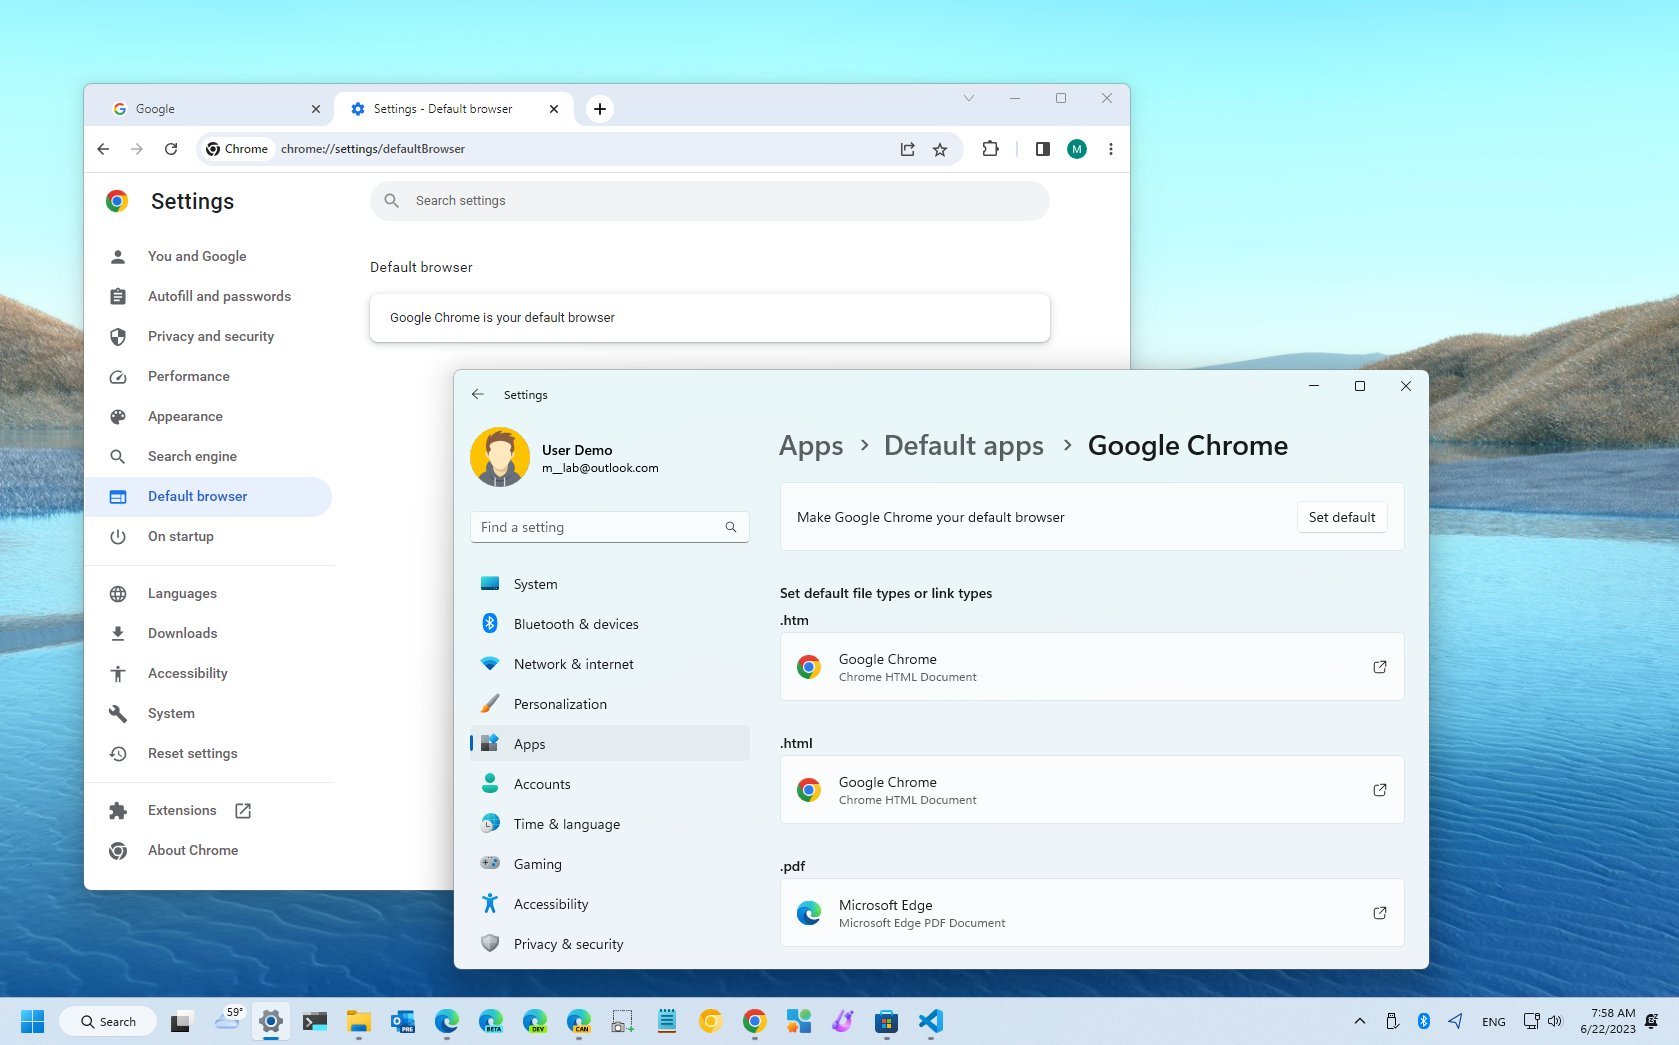 Windows 11 vs Chrome OS: Microsoft or Google?